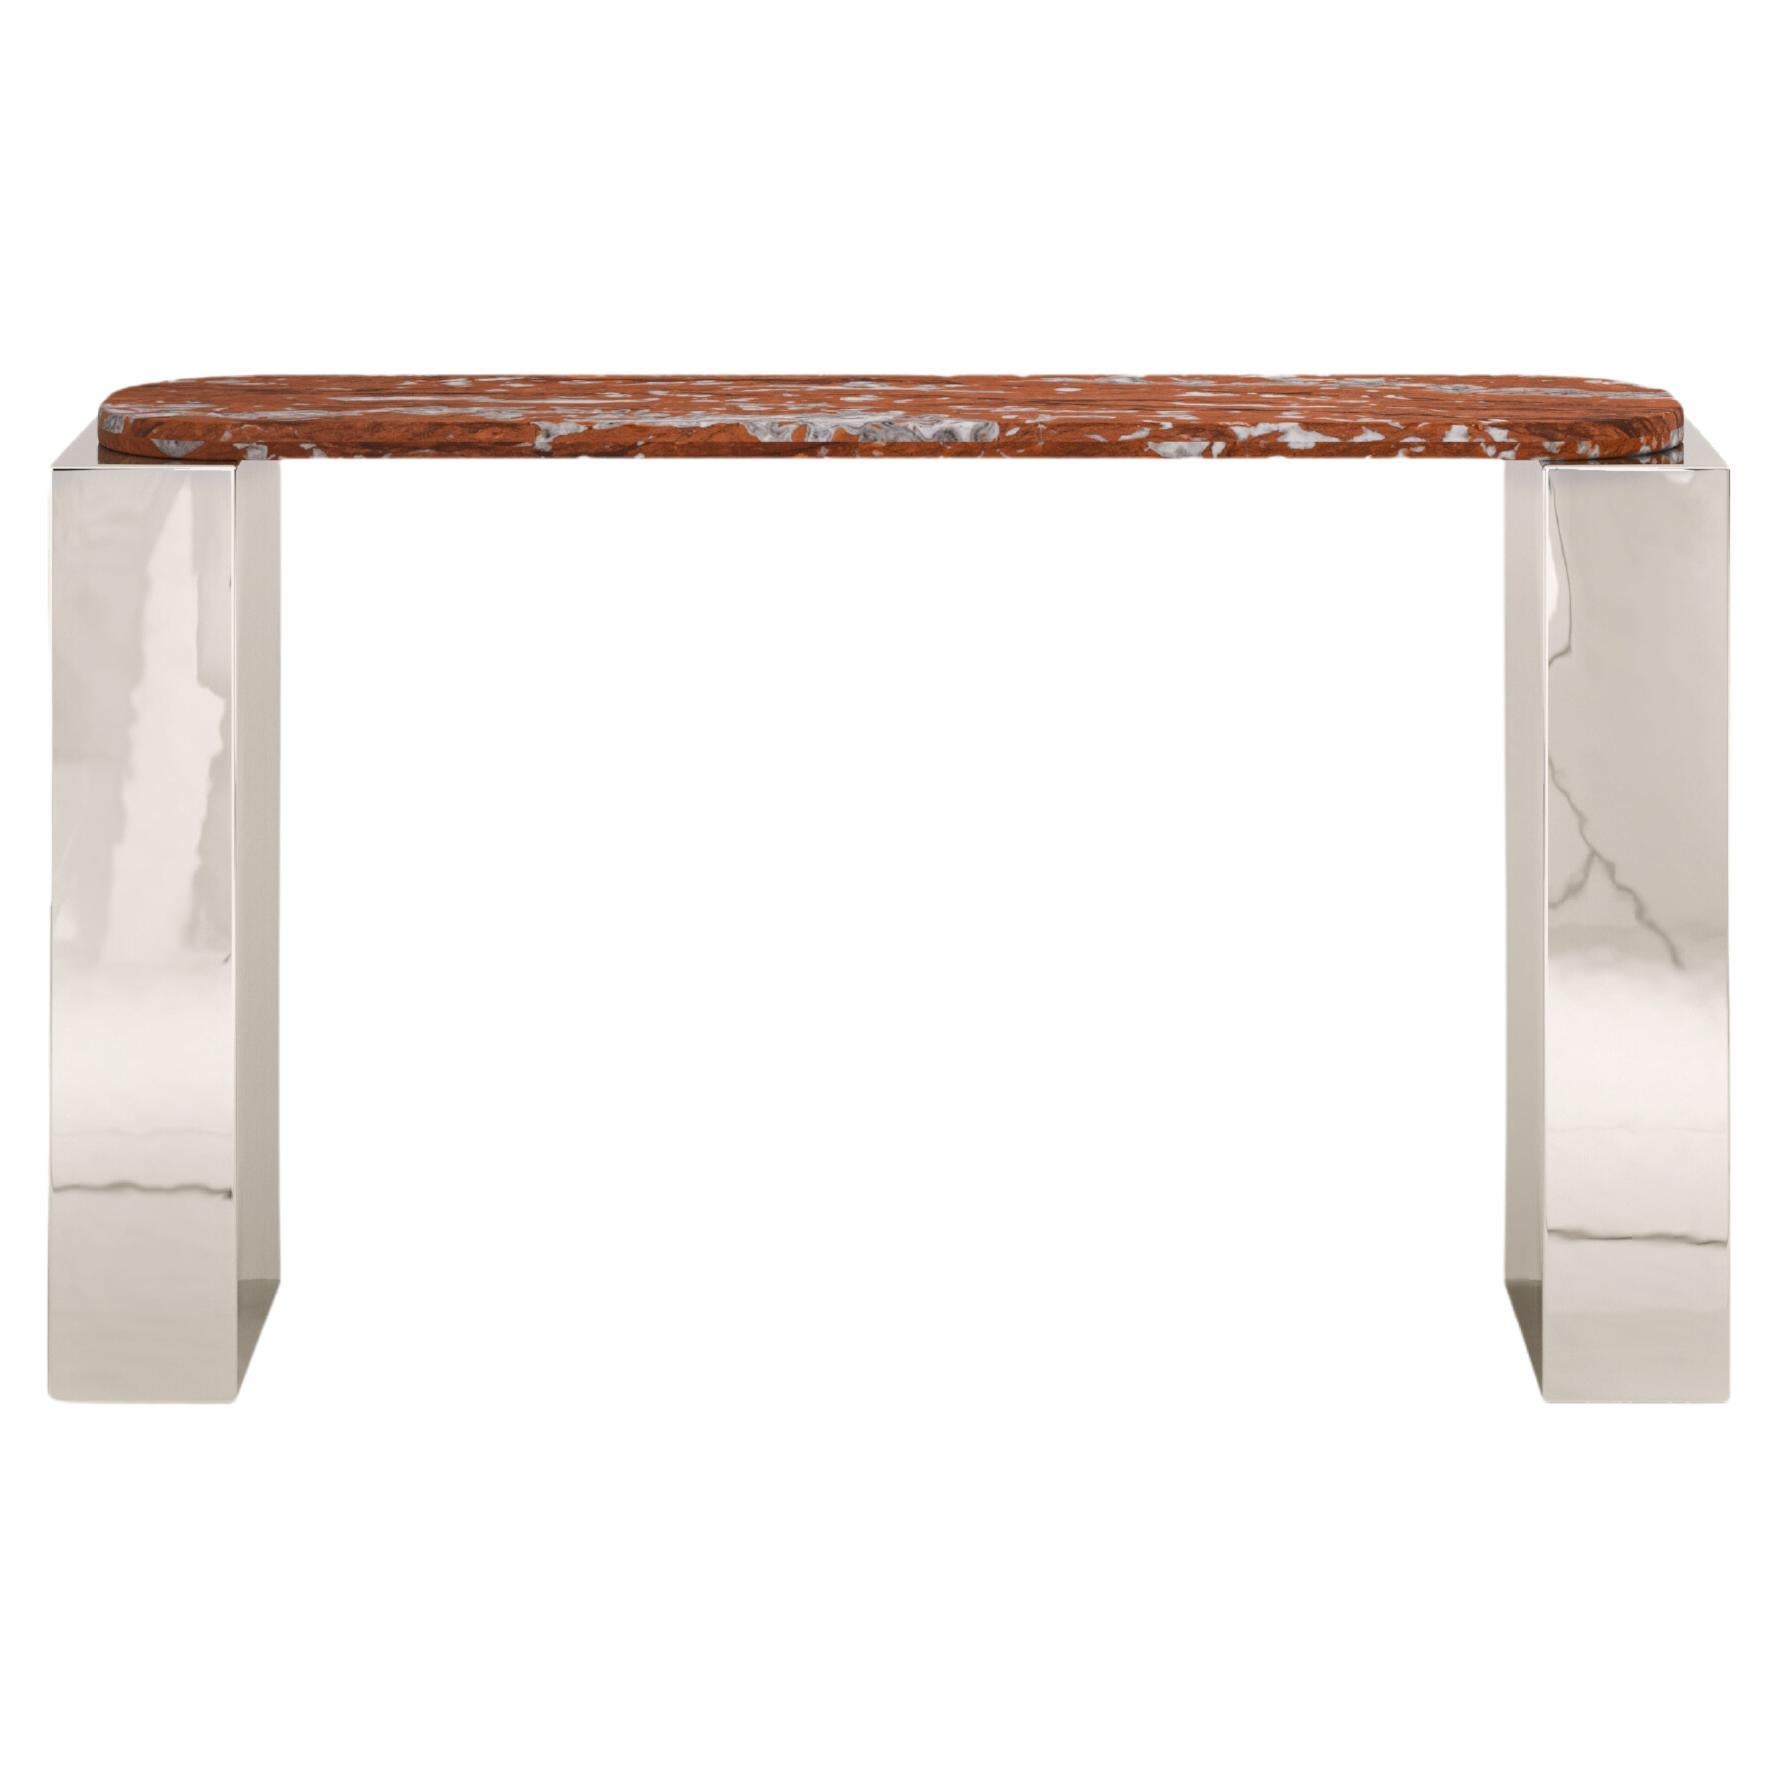 FORM(LA) Cubo Console Table 74”L x 17”W x 36”H Rosso Francia Marble & Chrome For Sale